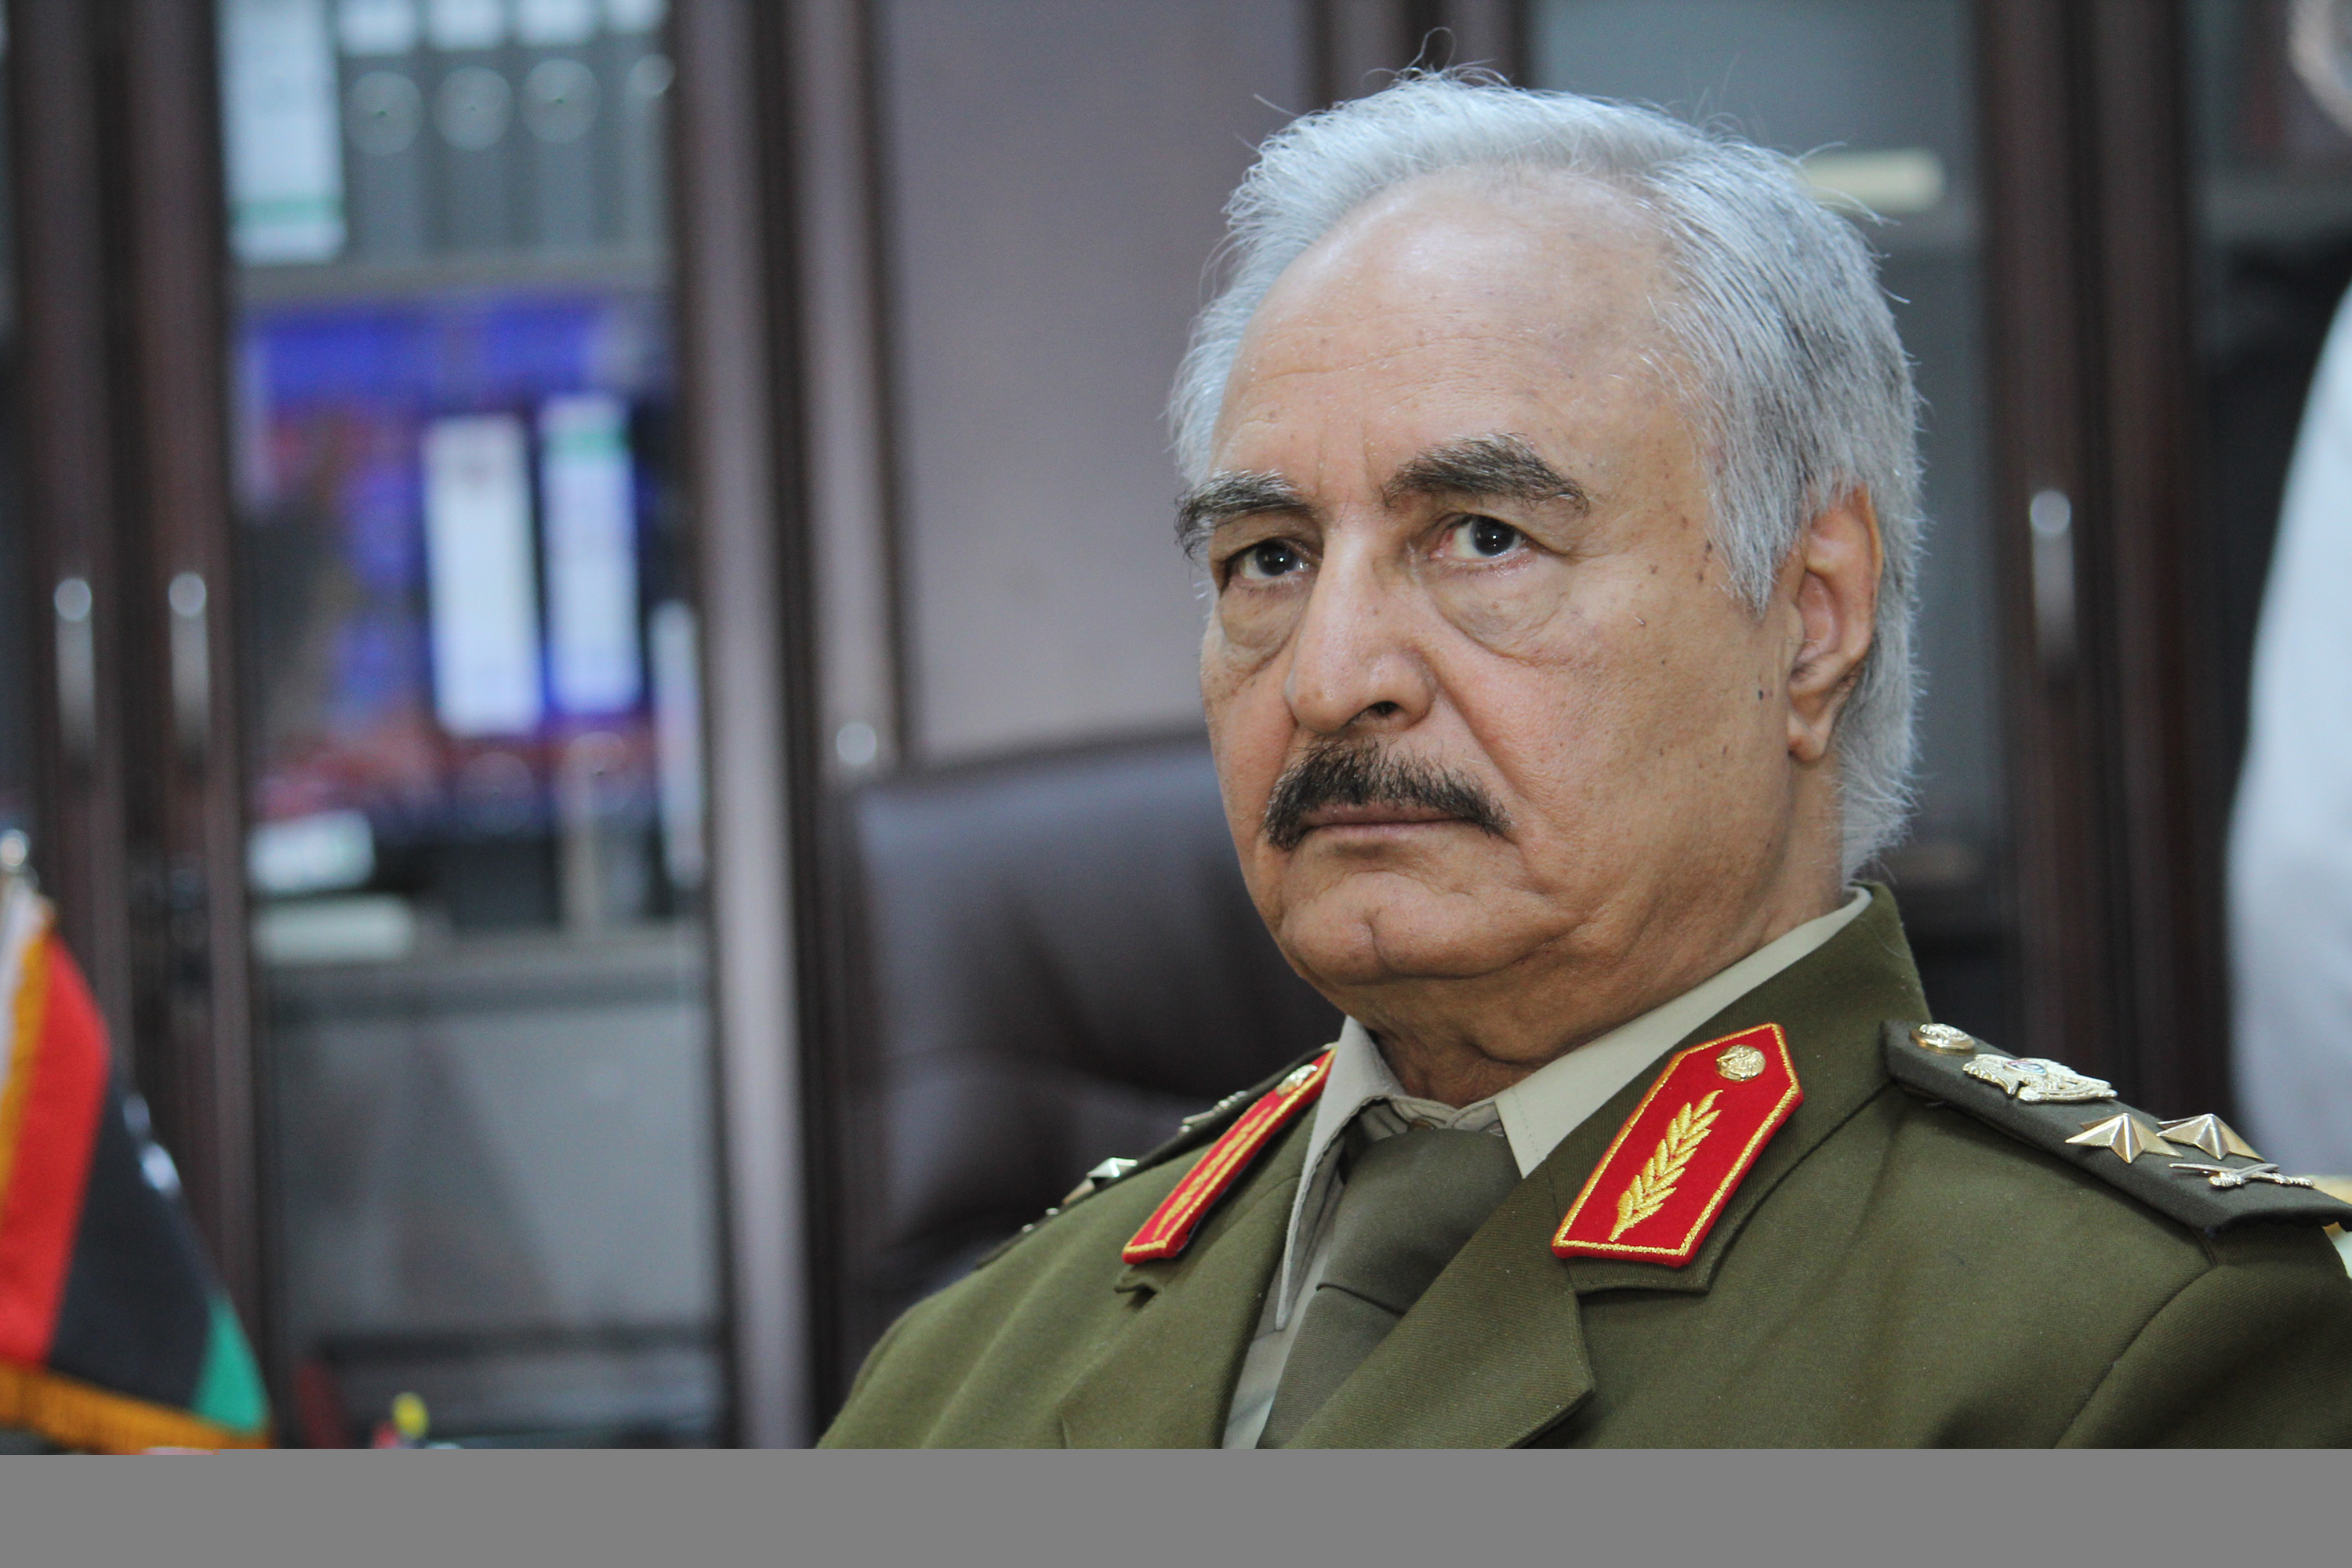 Халифа хафтар. Халиф Хафтар Ливия. Ливийская Национальная армия генерал Хафтар. Фельдмаршал Хафтар.